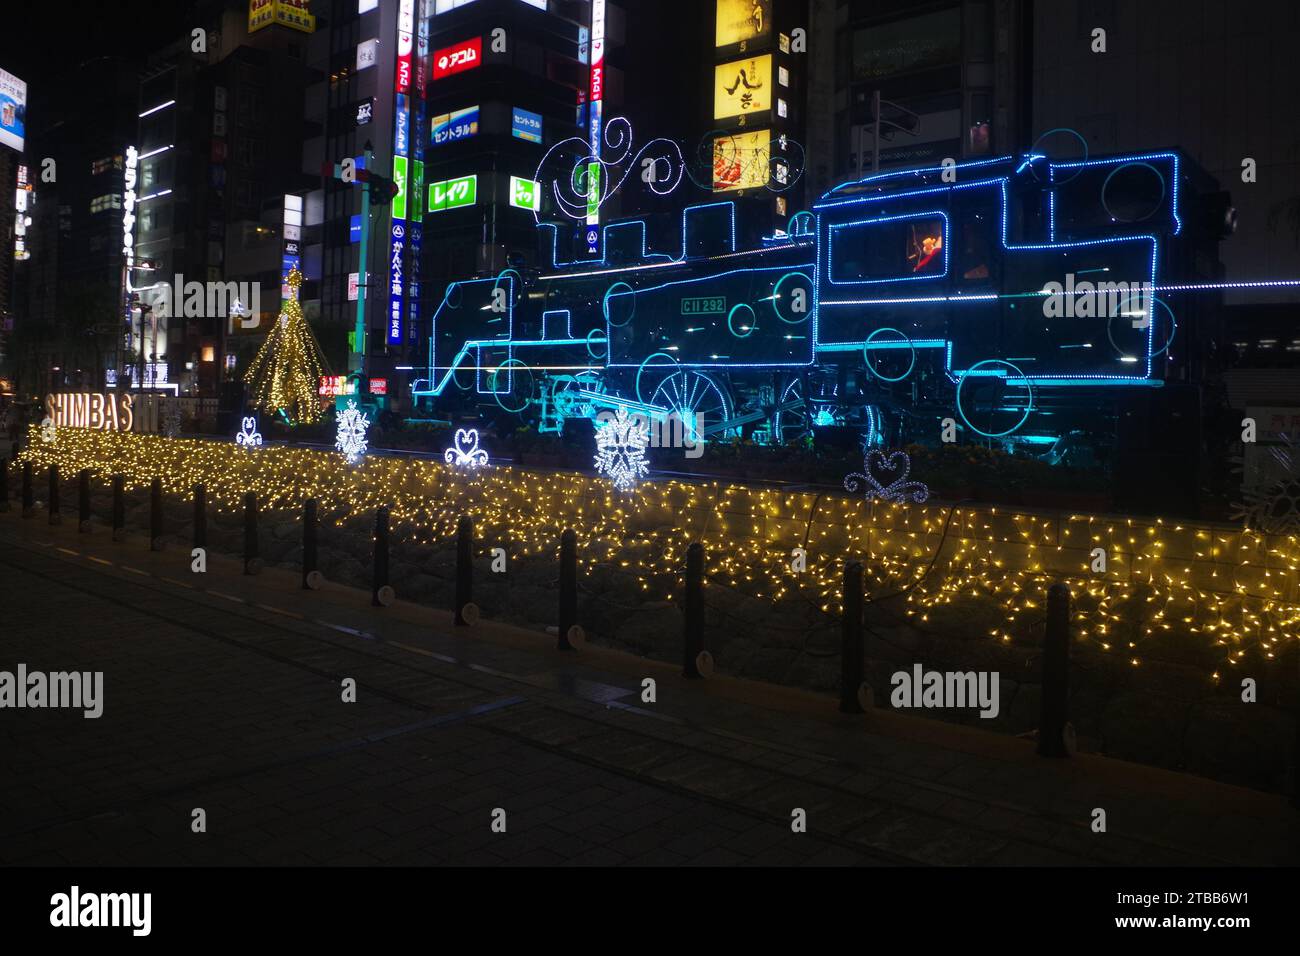 Weihnachtsbeleuchtung in Shimbashi, Tokio, Japan Stockfoto